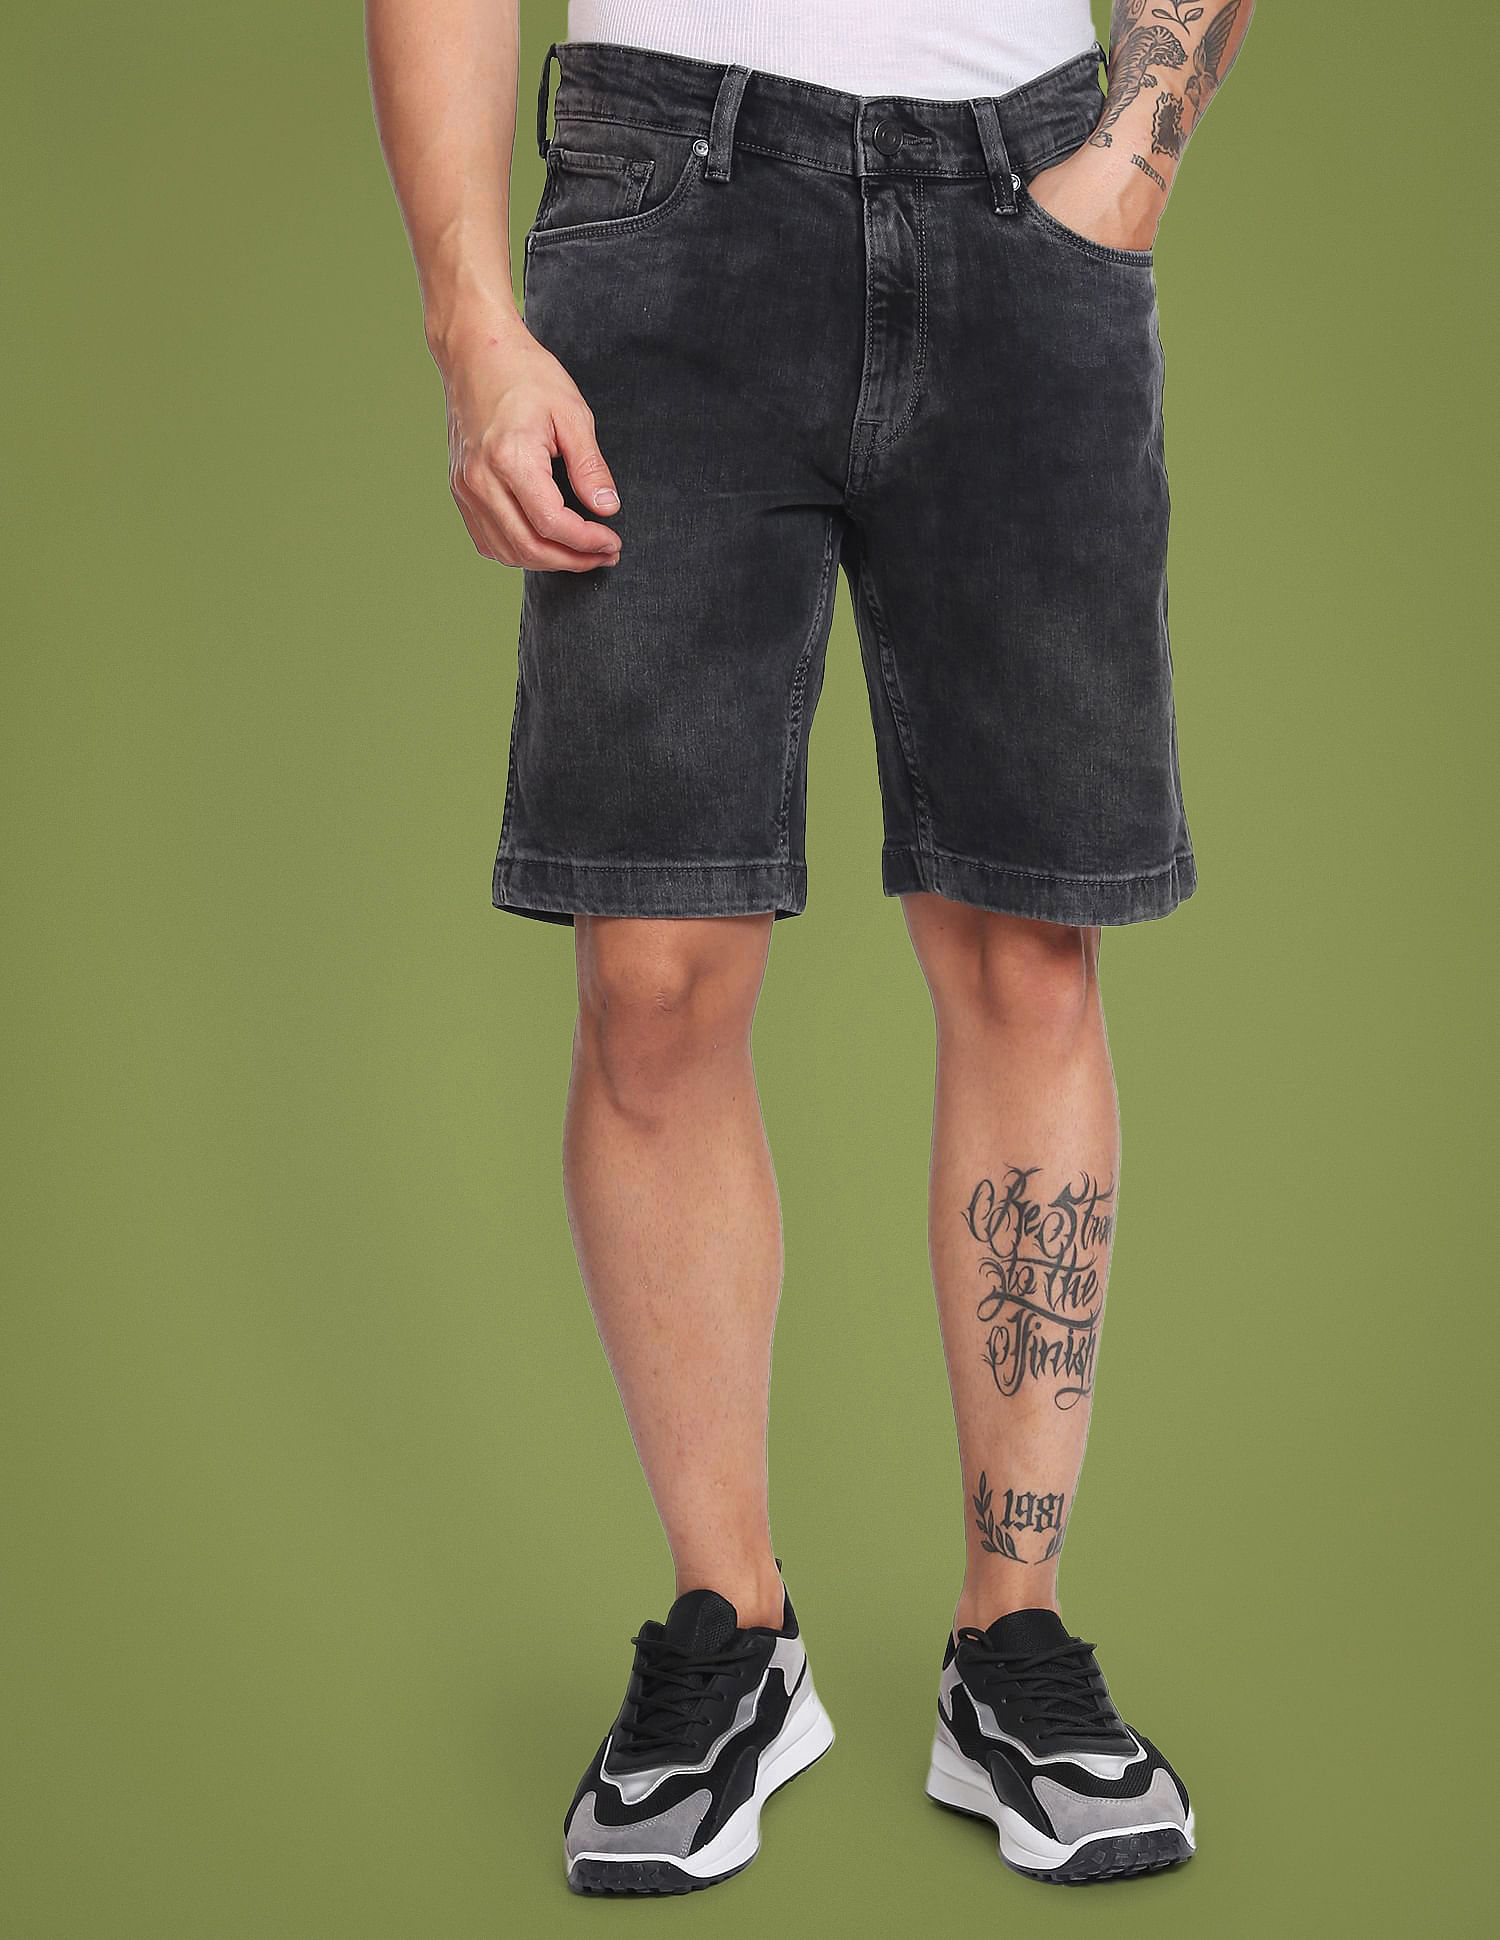 LONGBIDA Men's Casual Denim Shorts Two-Tone Slim Fit Stretchy Short Jeans(Black  Red,30) at Amazon Men's Clothing store